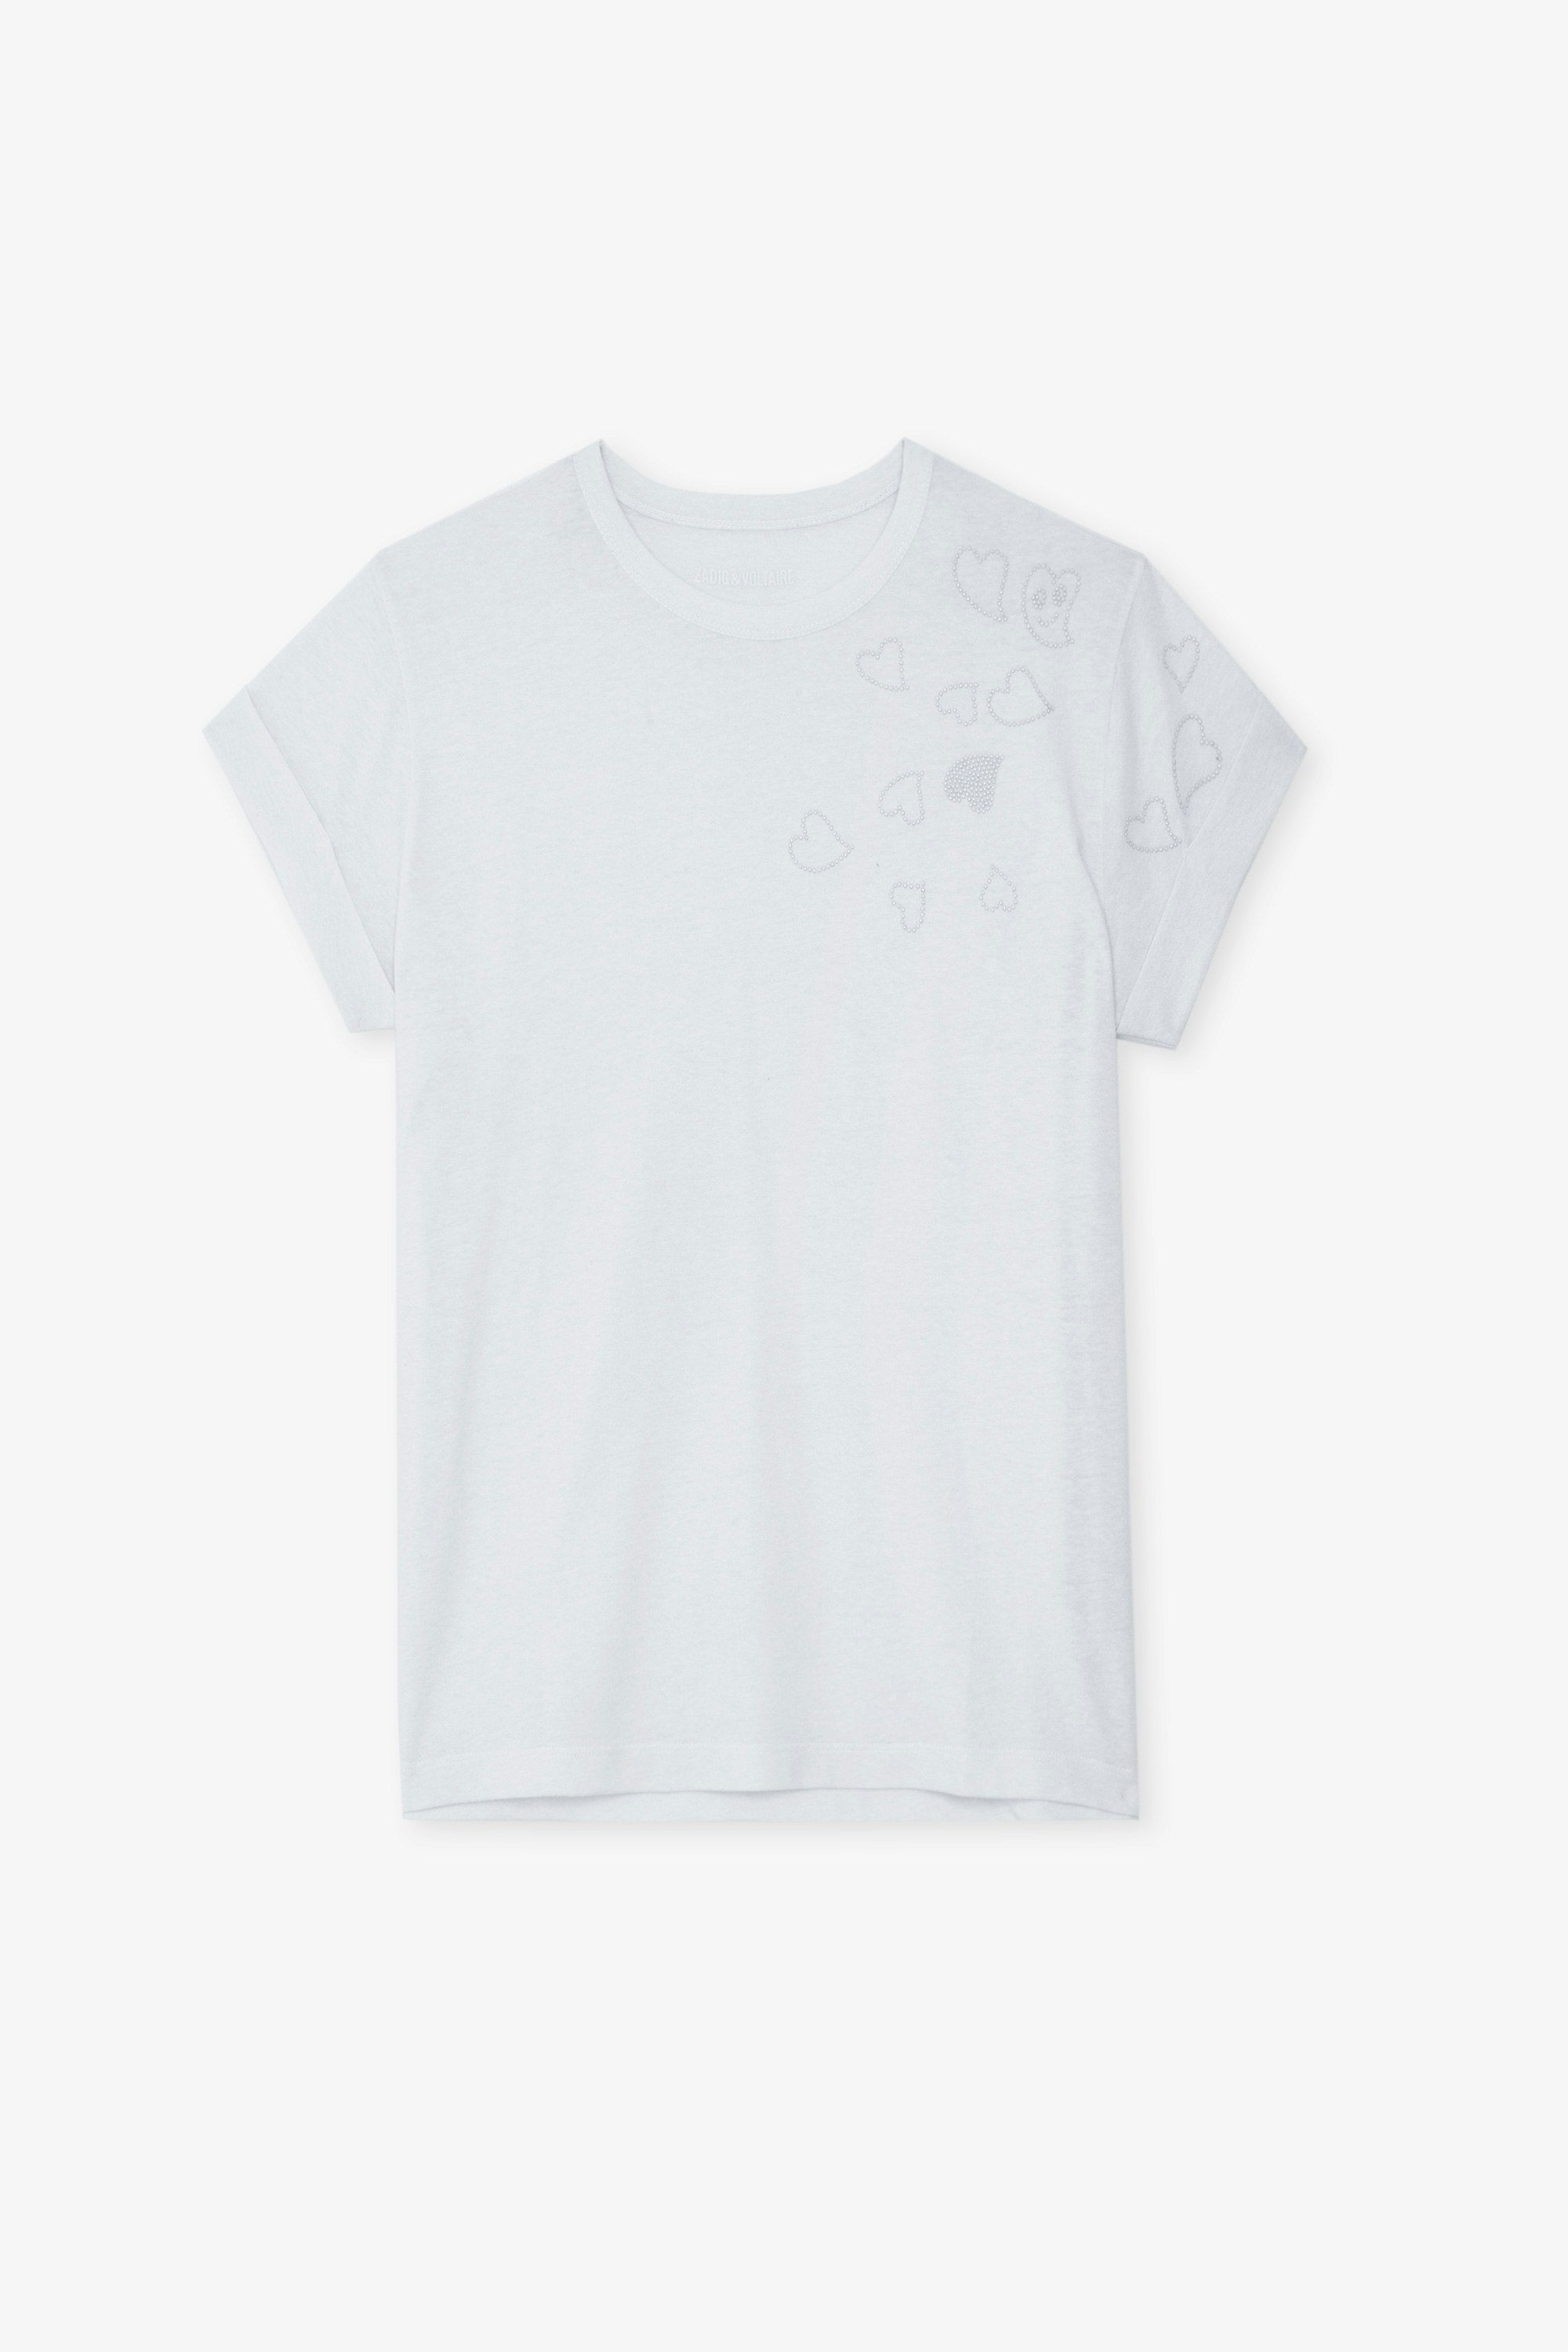 T-shirt Anya - T-shirt blanc à col rond, manches courtes et studs cœurs.